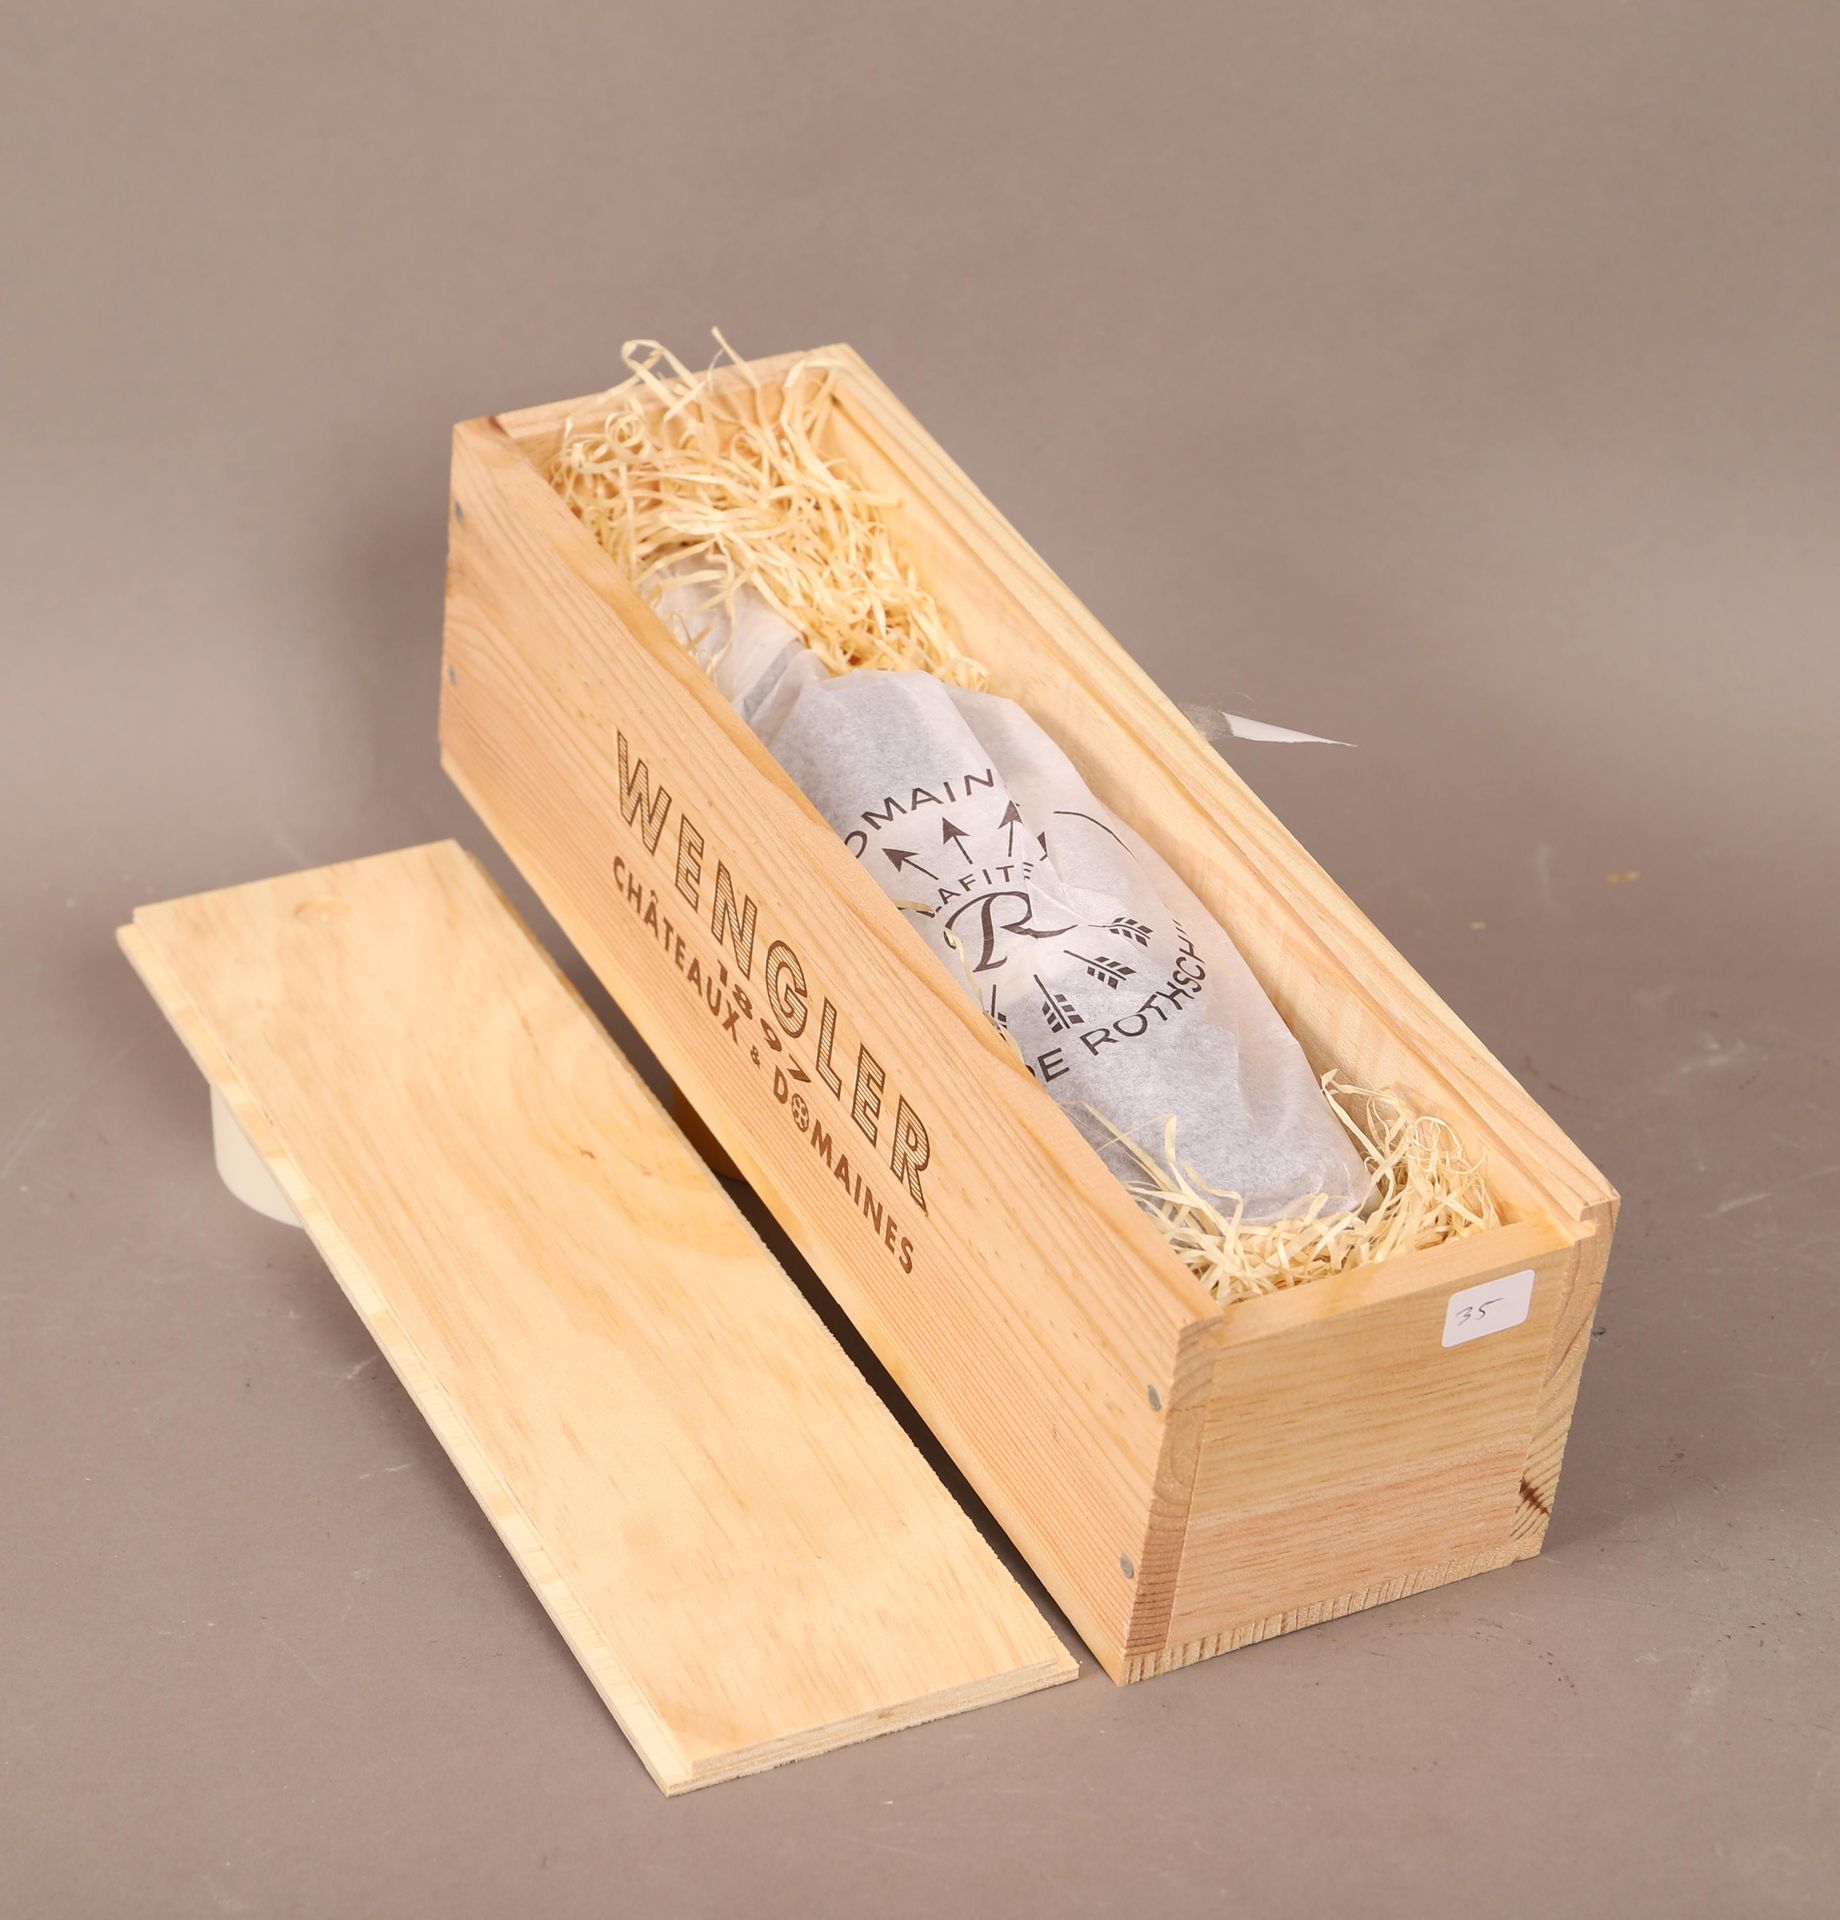 Null 拉菲古堡 (x1)

波亚克

2016

在它的丝绸纸上

木盒 - Wengler礼品盒

0,75L